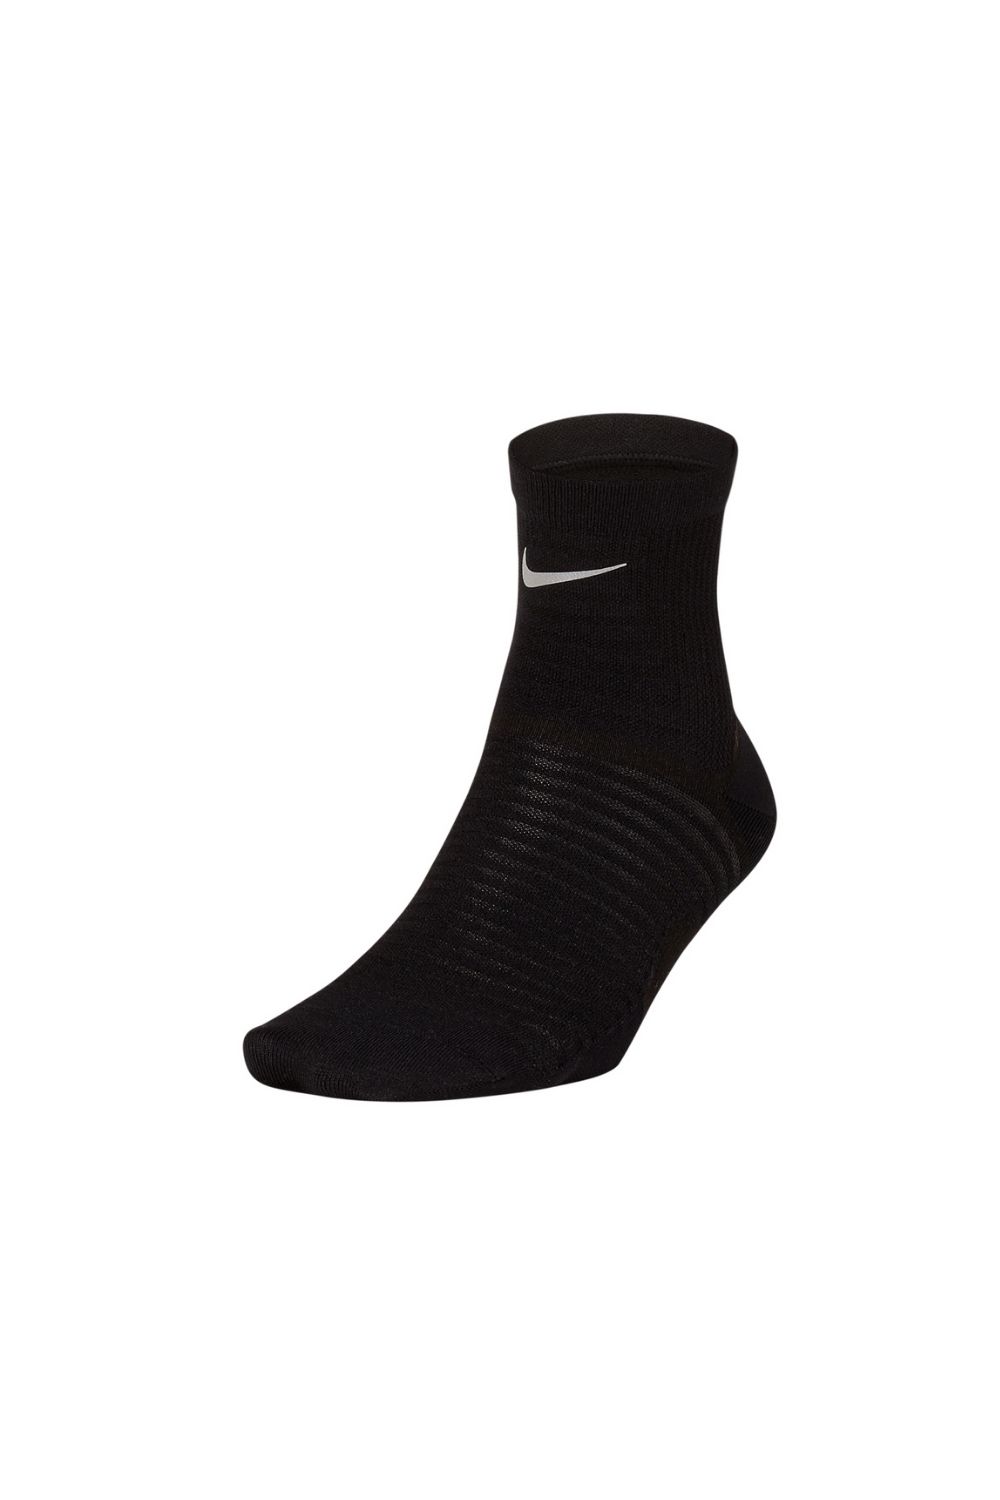 NIKE - Unisex κάλτσες NIKE SPARK LTWT ANKLE μαύρες Γυναικεία/Αξεσουάρ/Κάλτσες